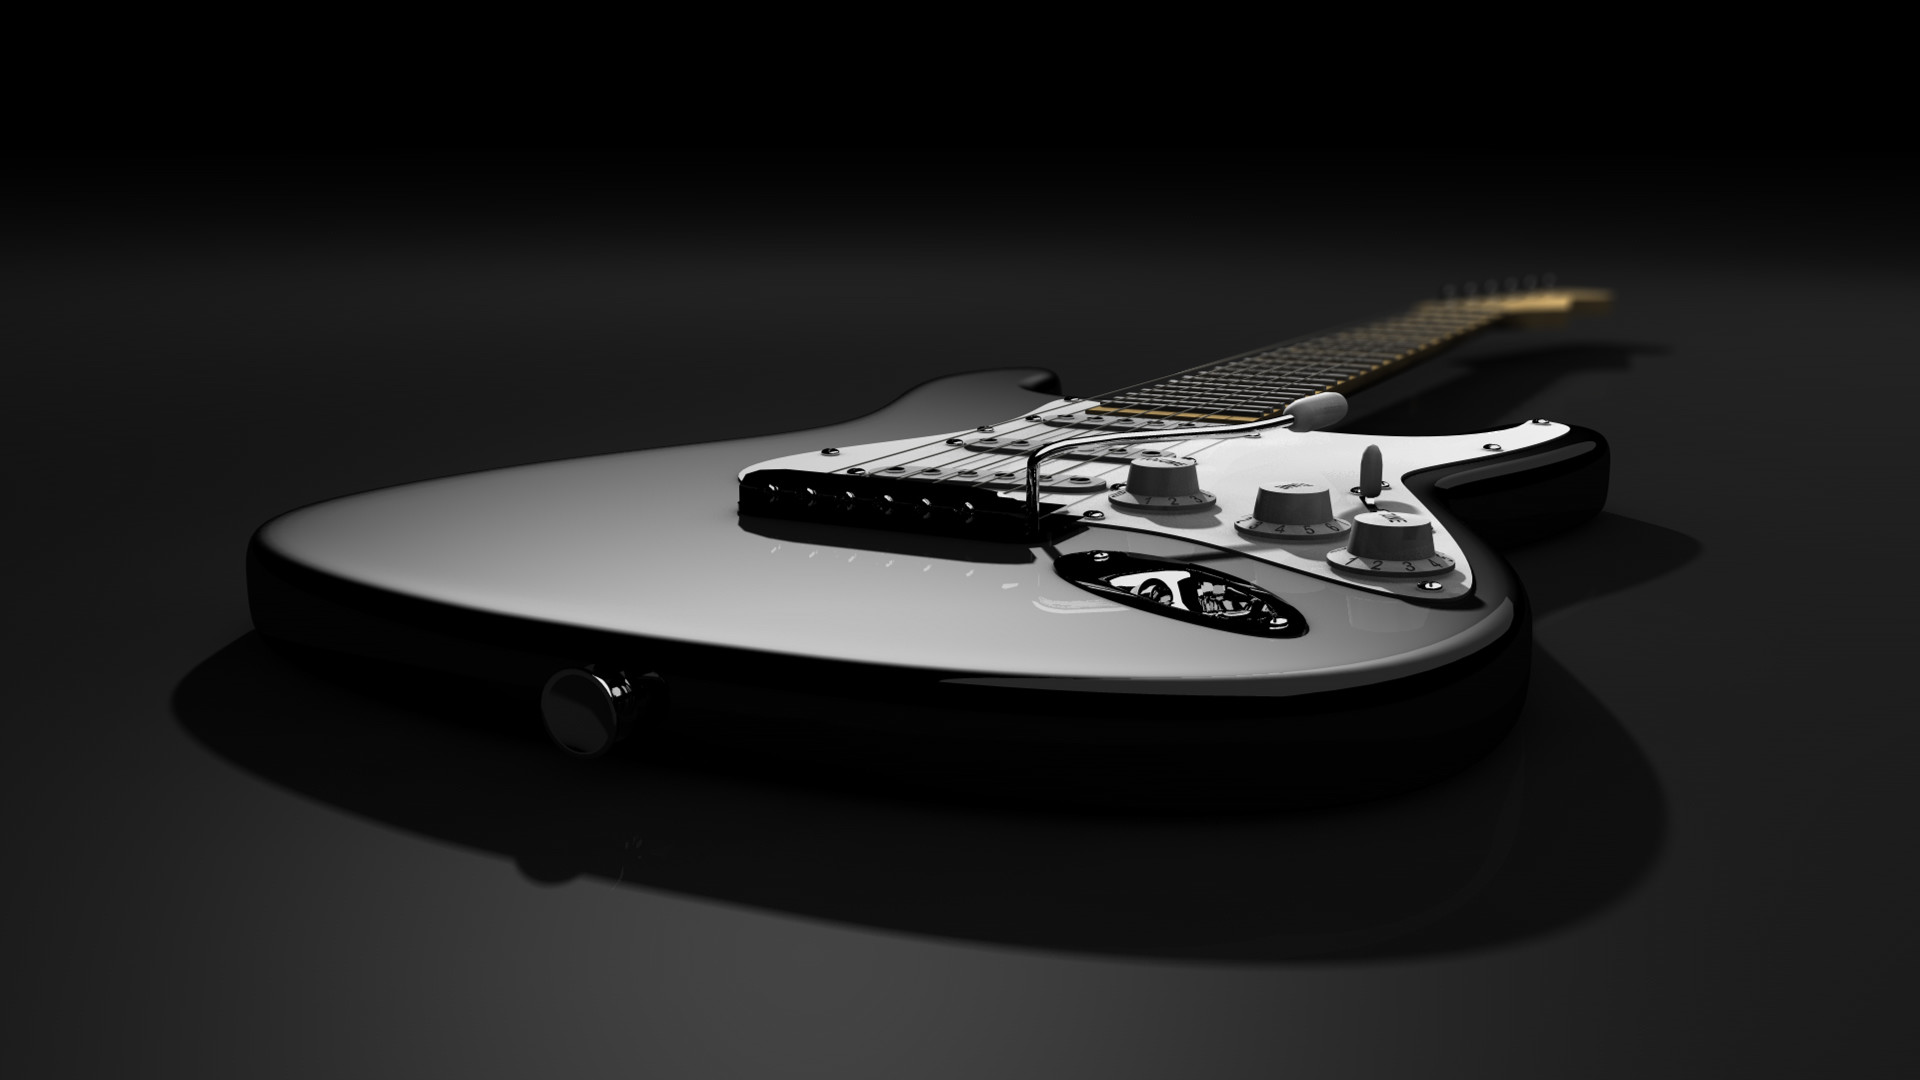 1920x1080 Fender Guitar Wallpapers For Desktop 2575 Hd Wallpapers in Music .